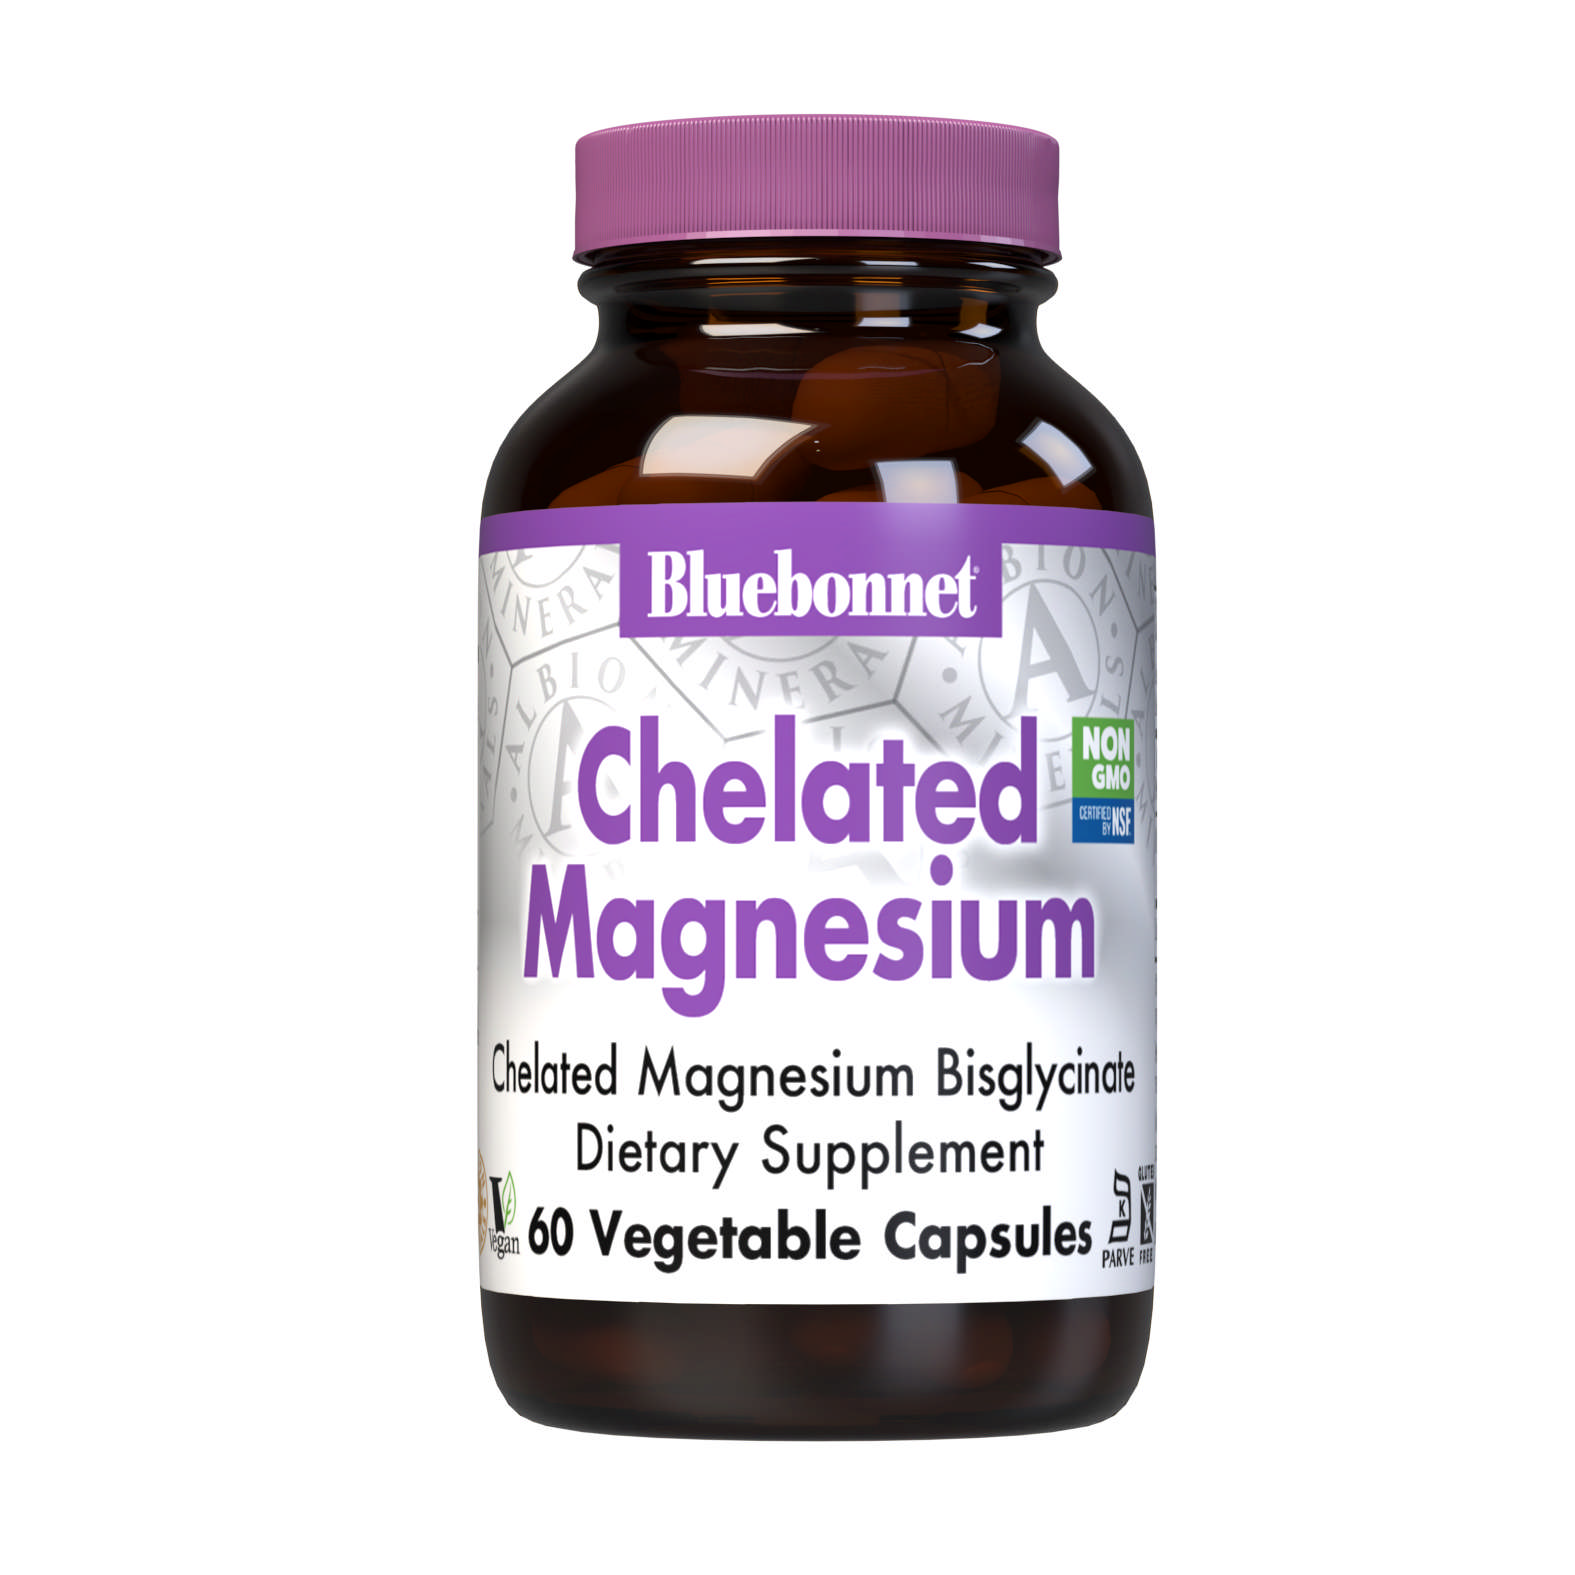 Bluebonnet - Mag Chel Bisglyc 100 mg